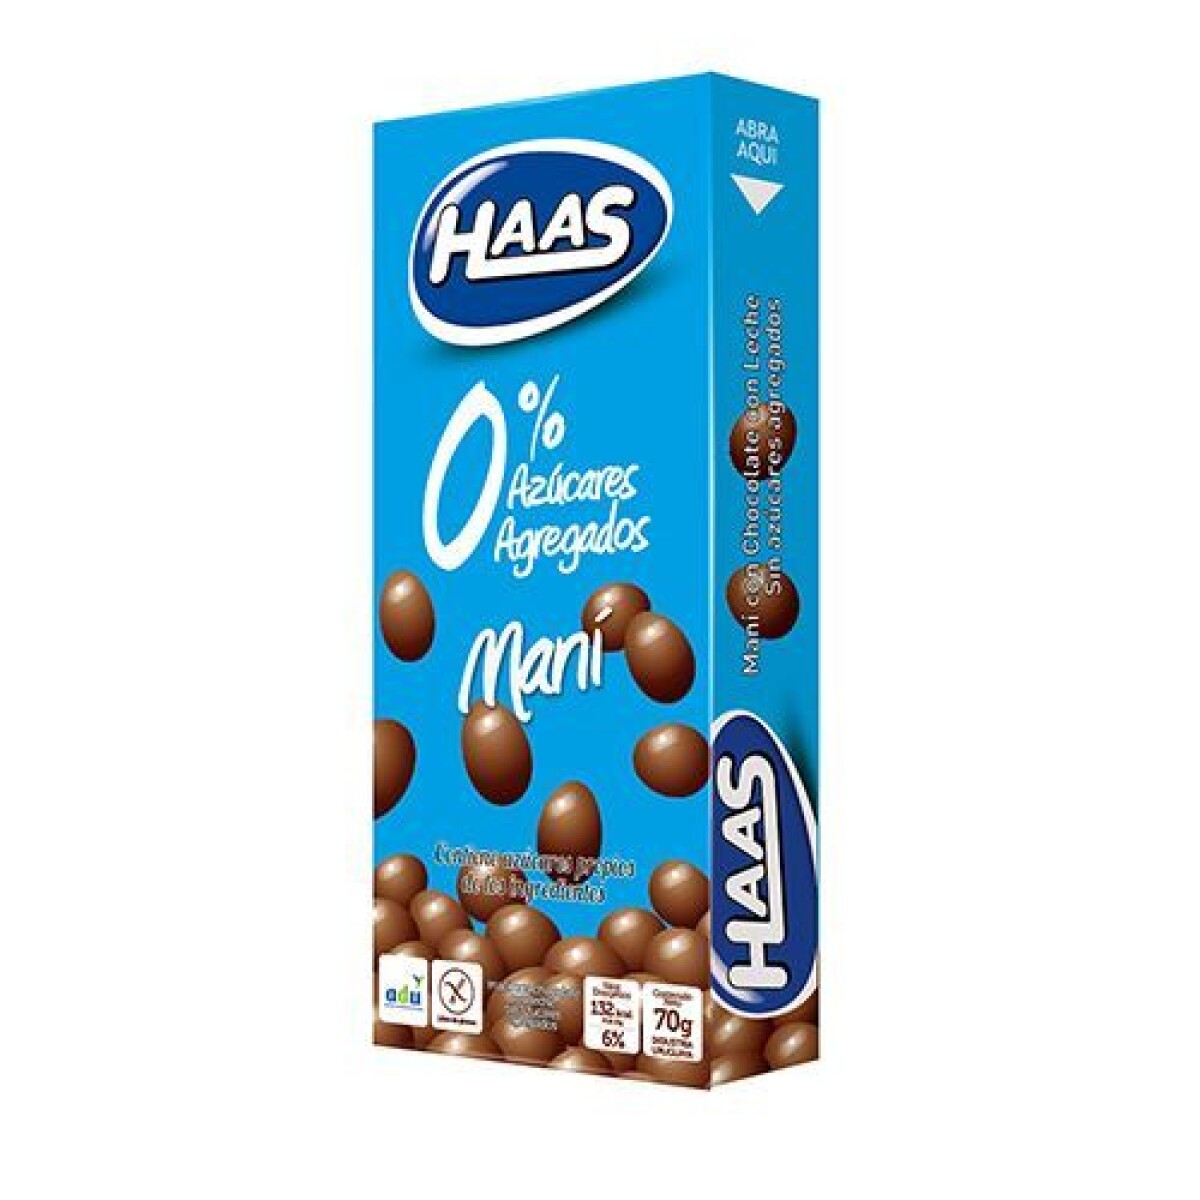 Maní Con Chocolate Haas Con Leche 0% Azúcar 70 GR 